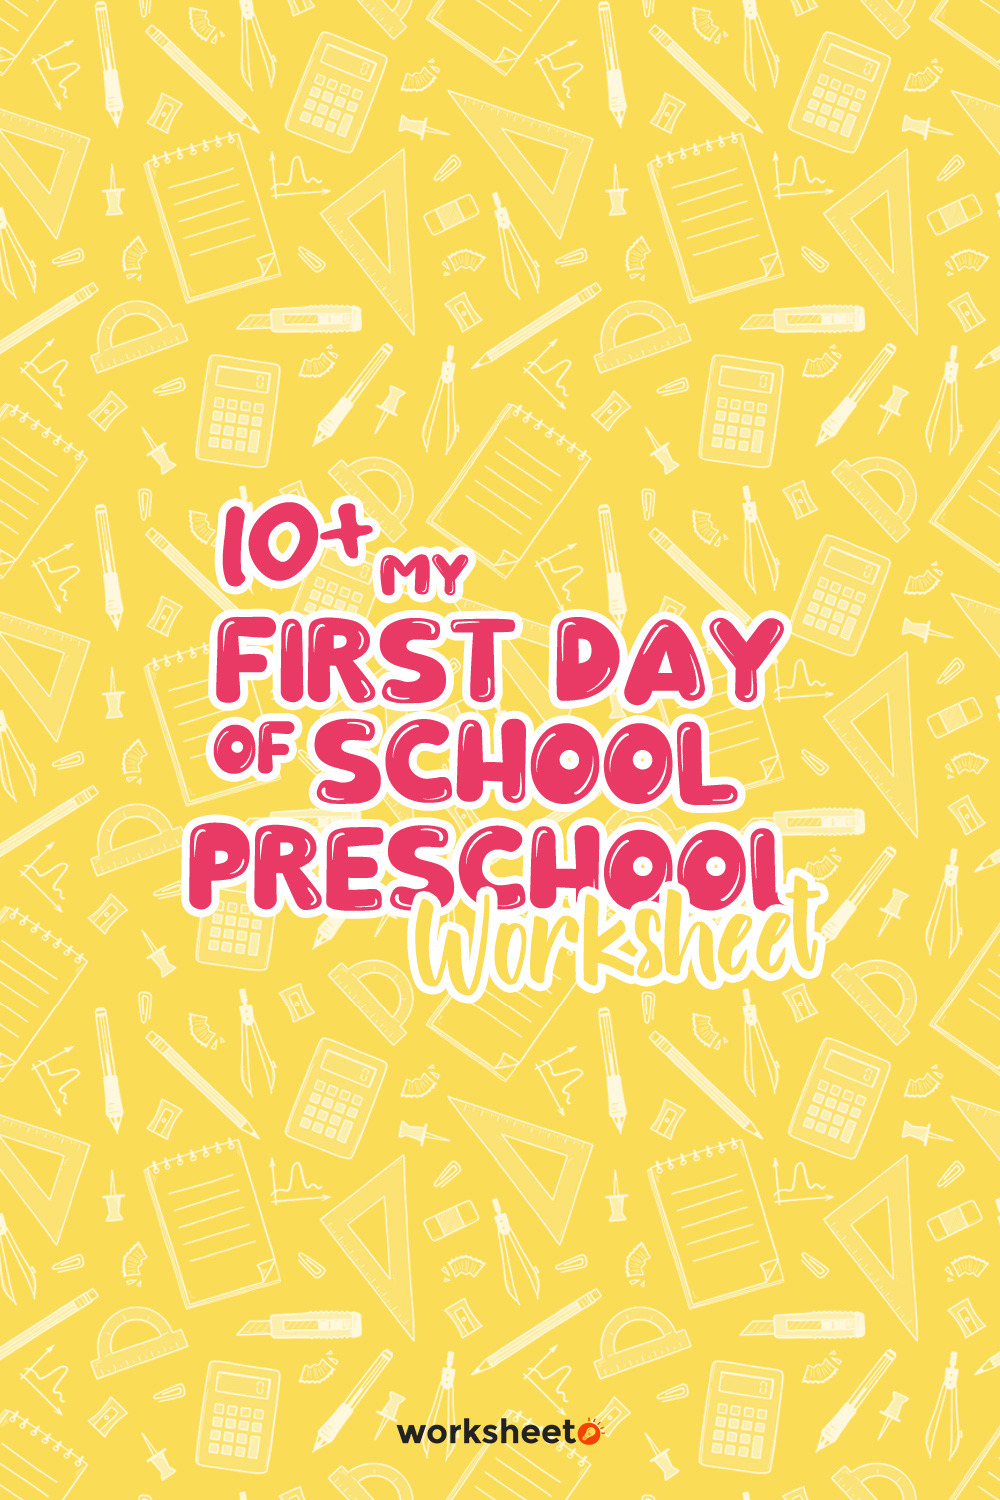 12 Images of My First Day Of School Preschool Worksheet